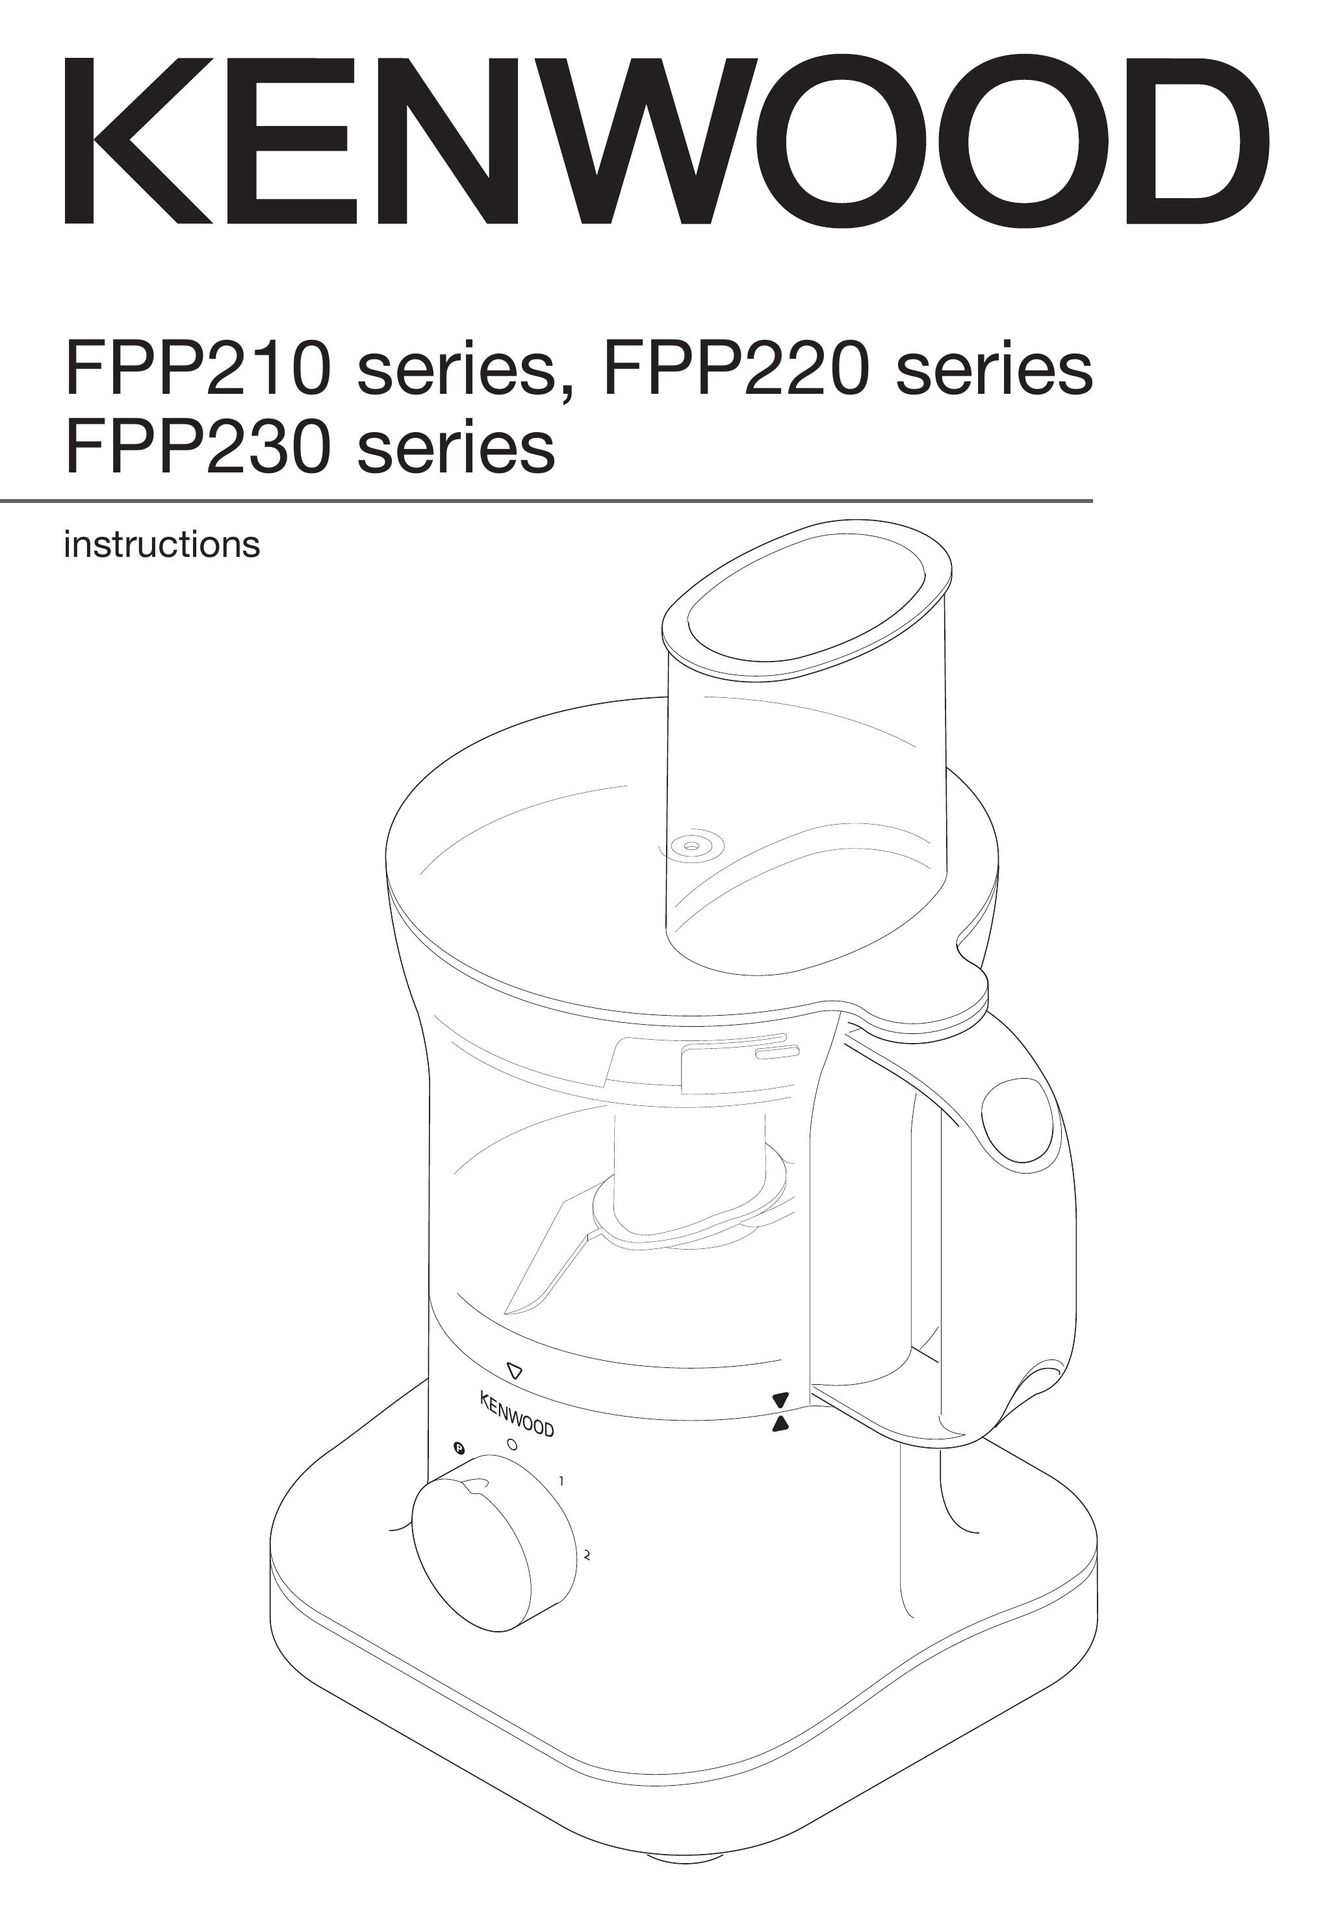 Kenwood FPP230 series Food Processor User Manual